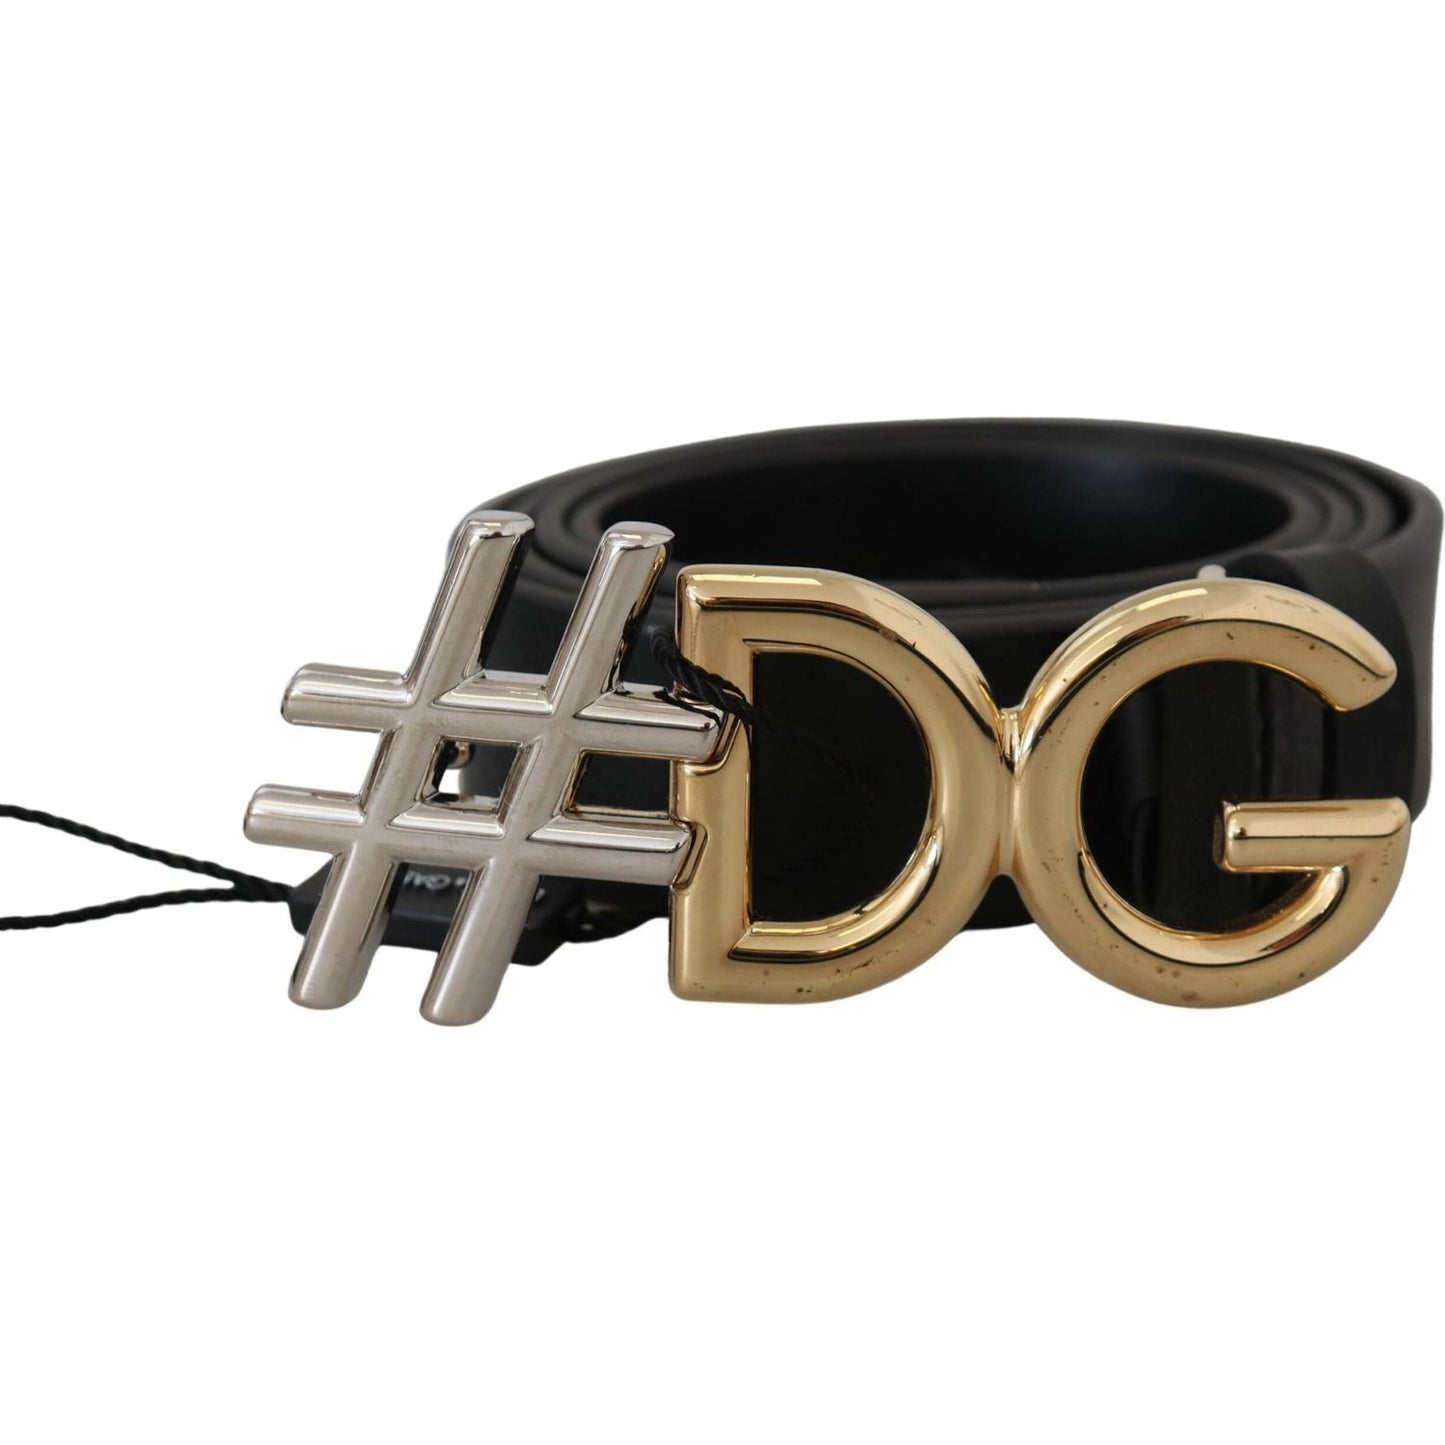 Black Leather Metal #DG Logo Buckle Belt